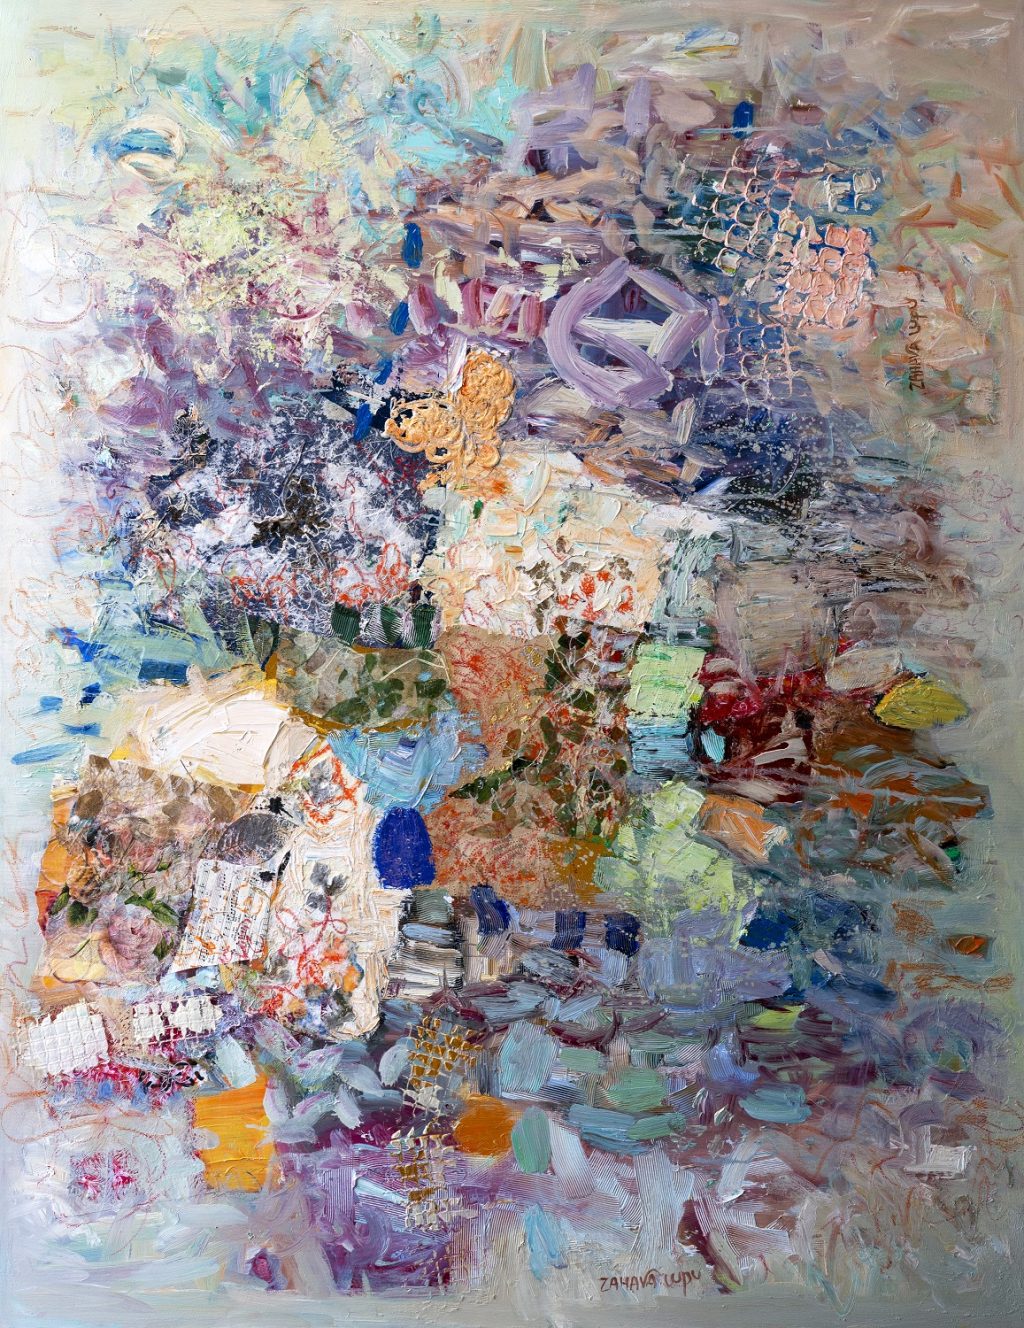 Art time gallery Jerusalem(Art online) -  Zahava Lupo - Music and flowers - Original Oil on Canvas - 100 x 130 cm (40 x 51 in)